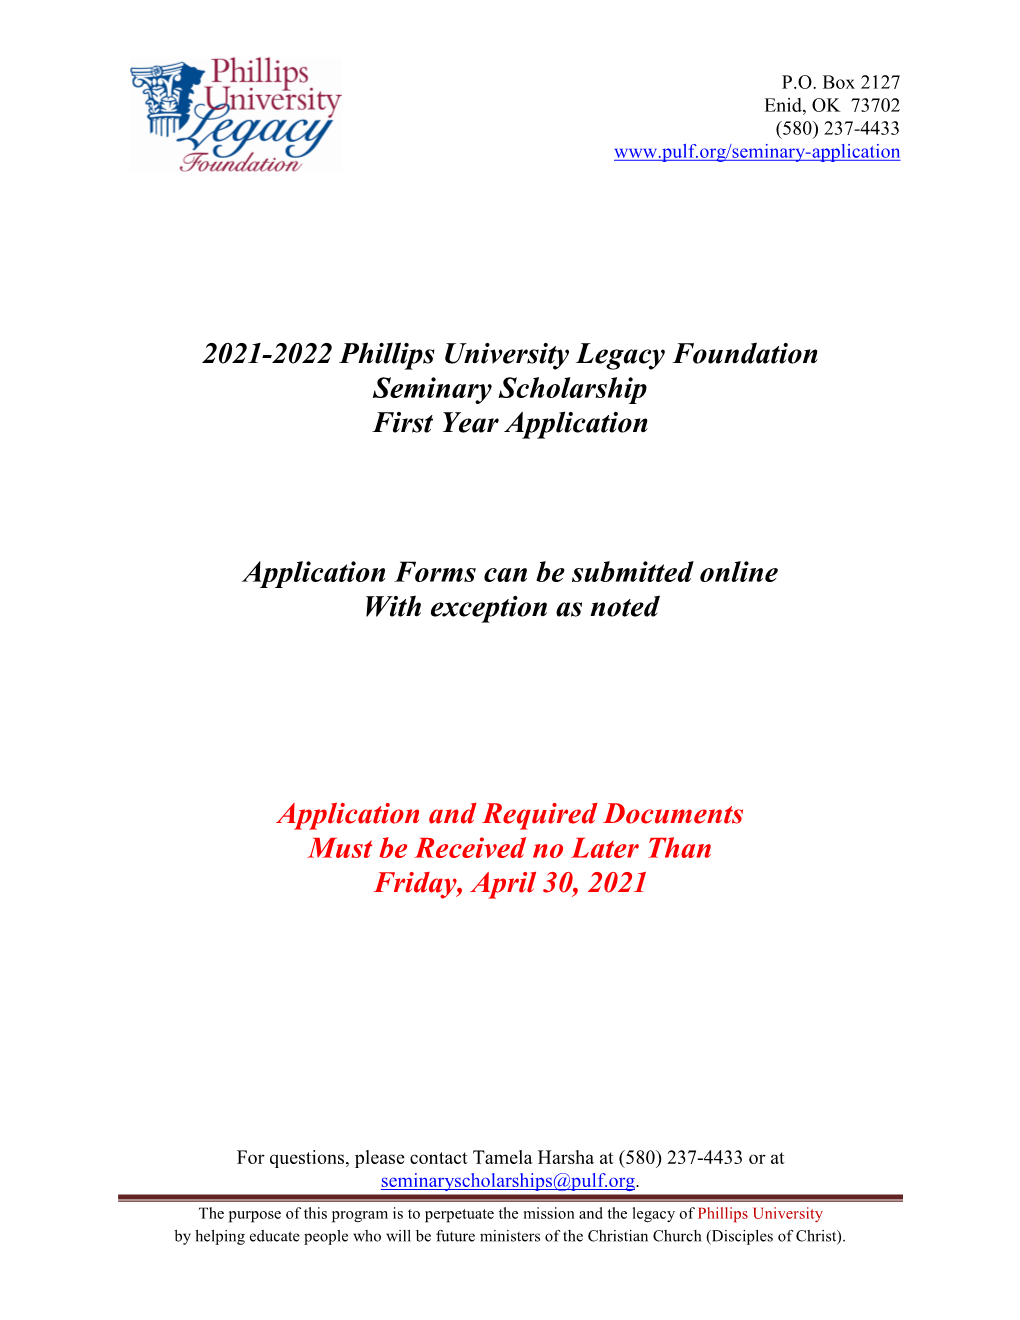 2021-2022 Phillips University Legacy Foundation Seminary Scholarship First Year Application